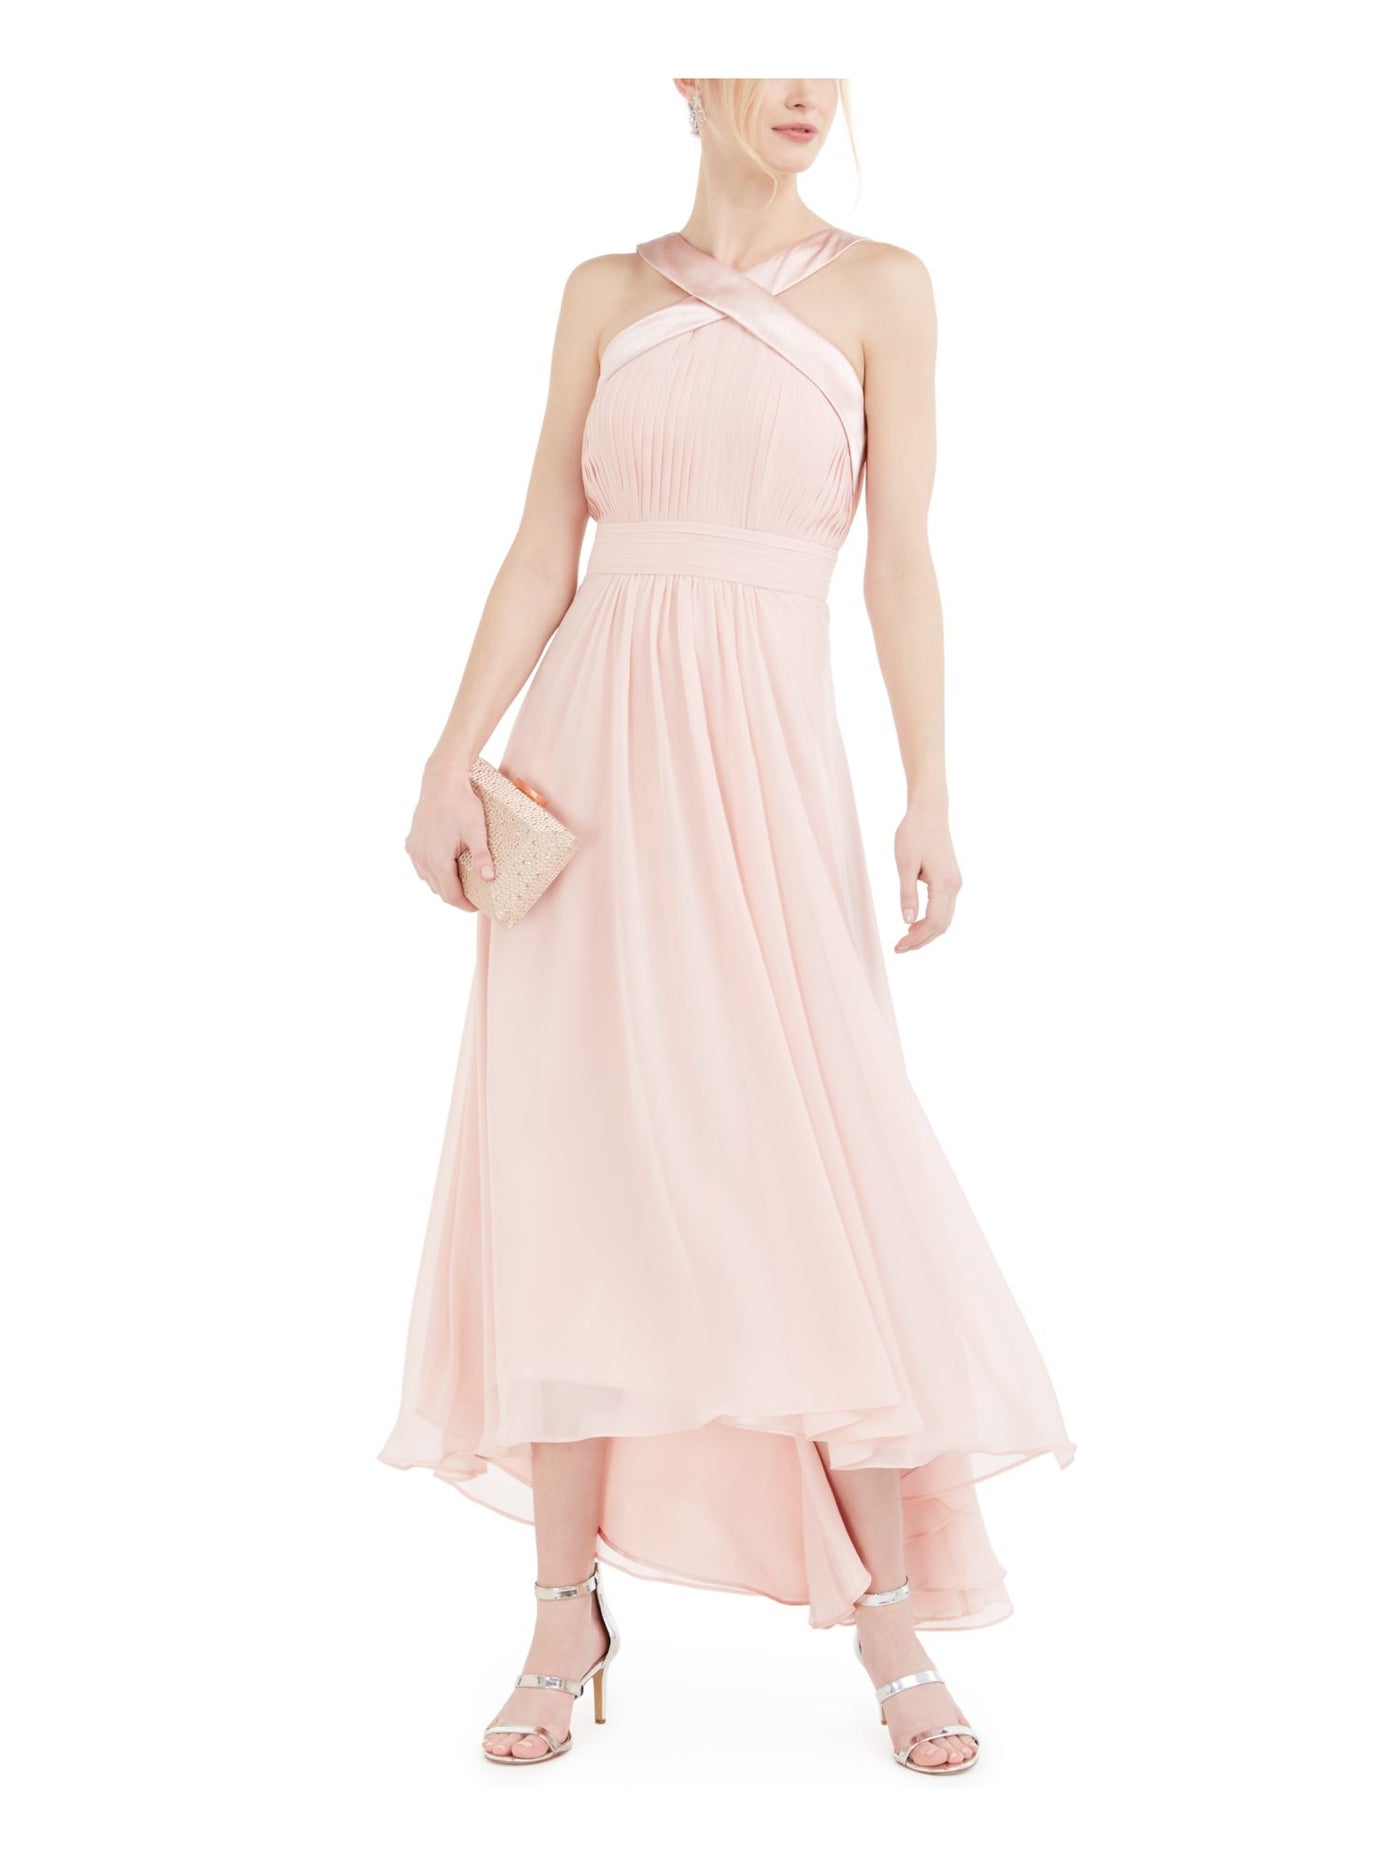 ELIZA J Womens Pink Pleated Zippered Chiffon Sleeveless Halter Full-Length Formal Hi-Lo Dress Petites 10P